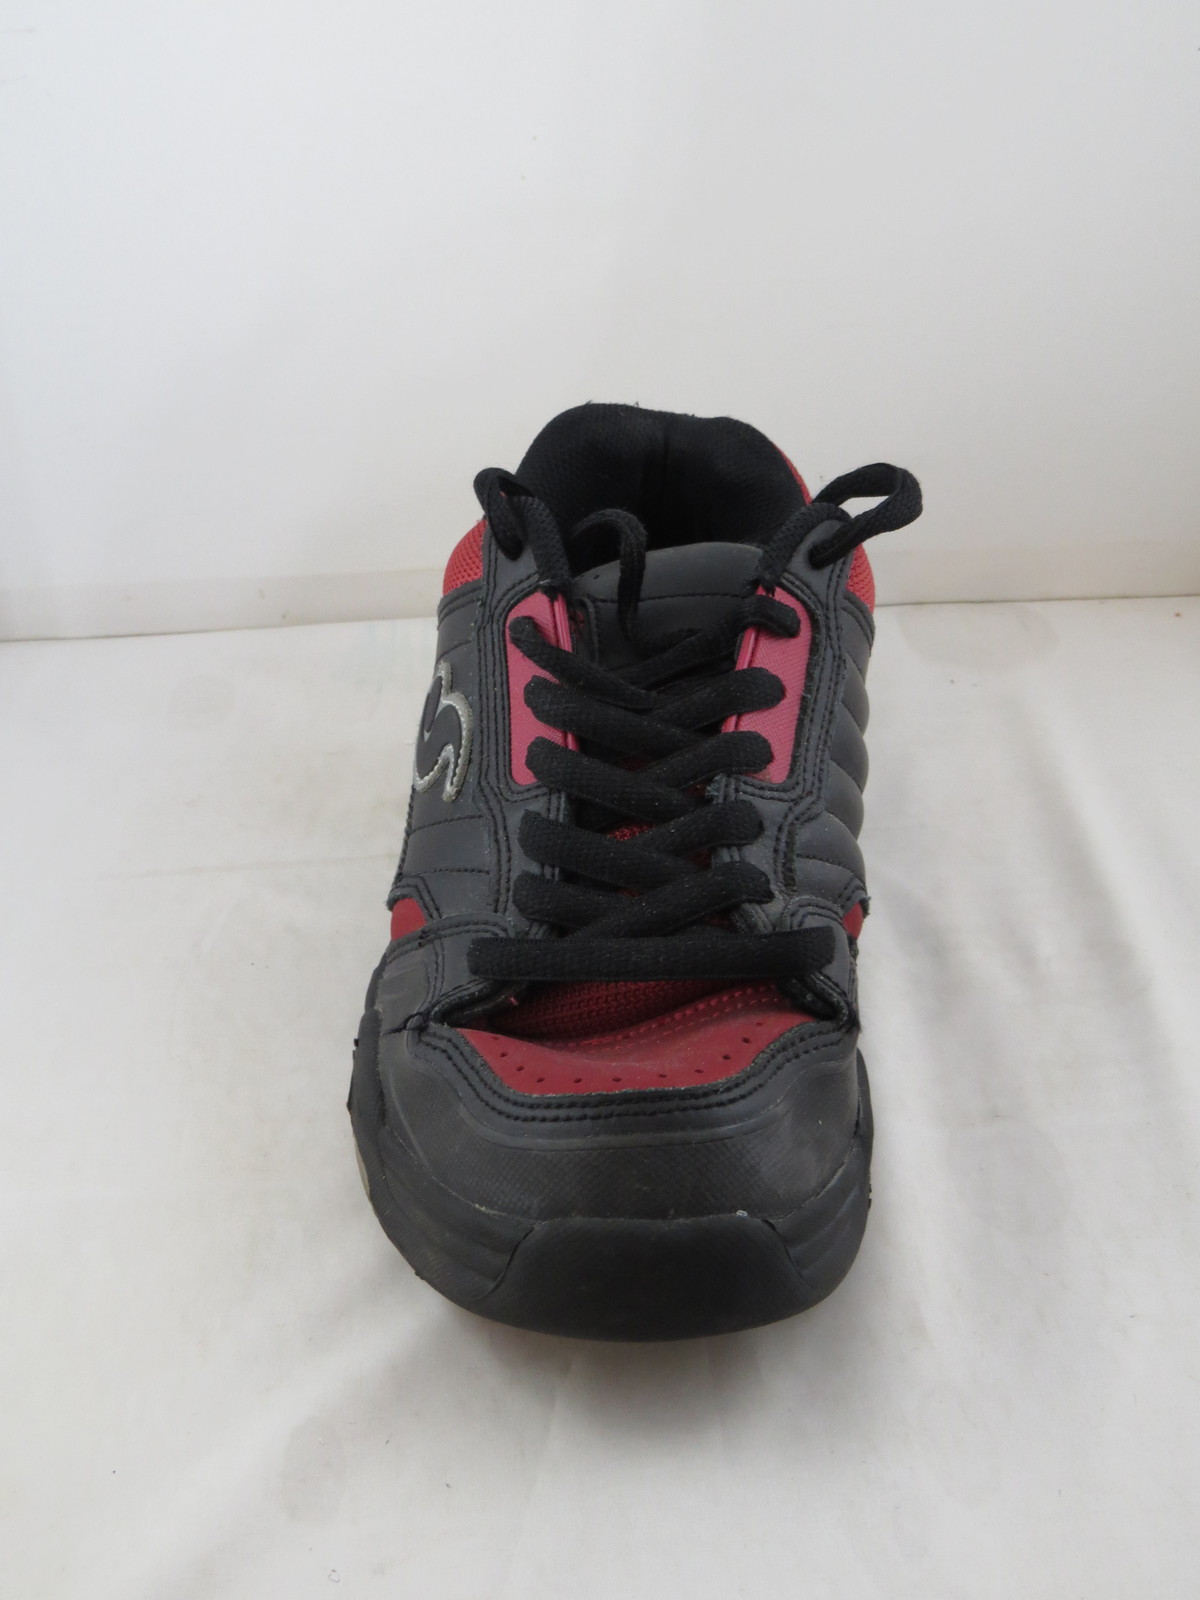 Vintage Skateboard Shoes - DVS Profiles Red and Black - Men's size 7 ...